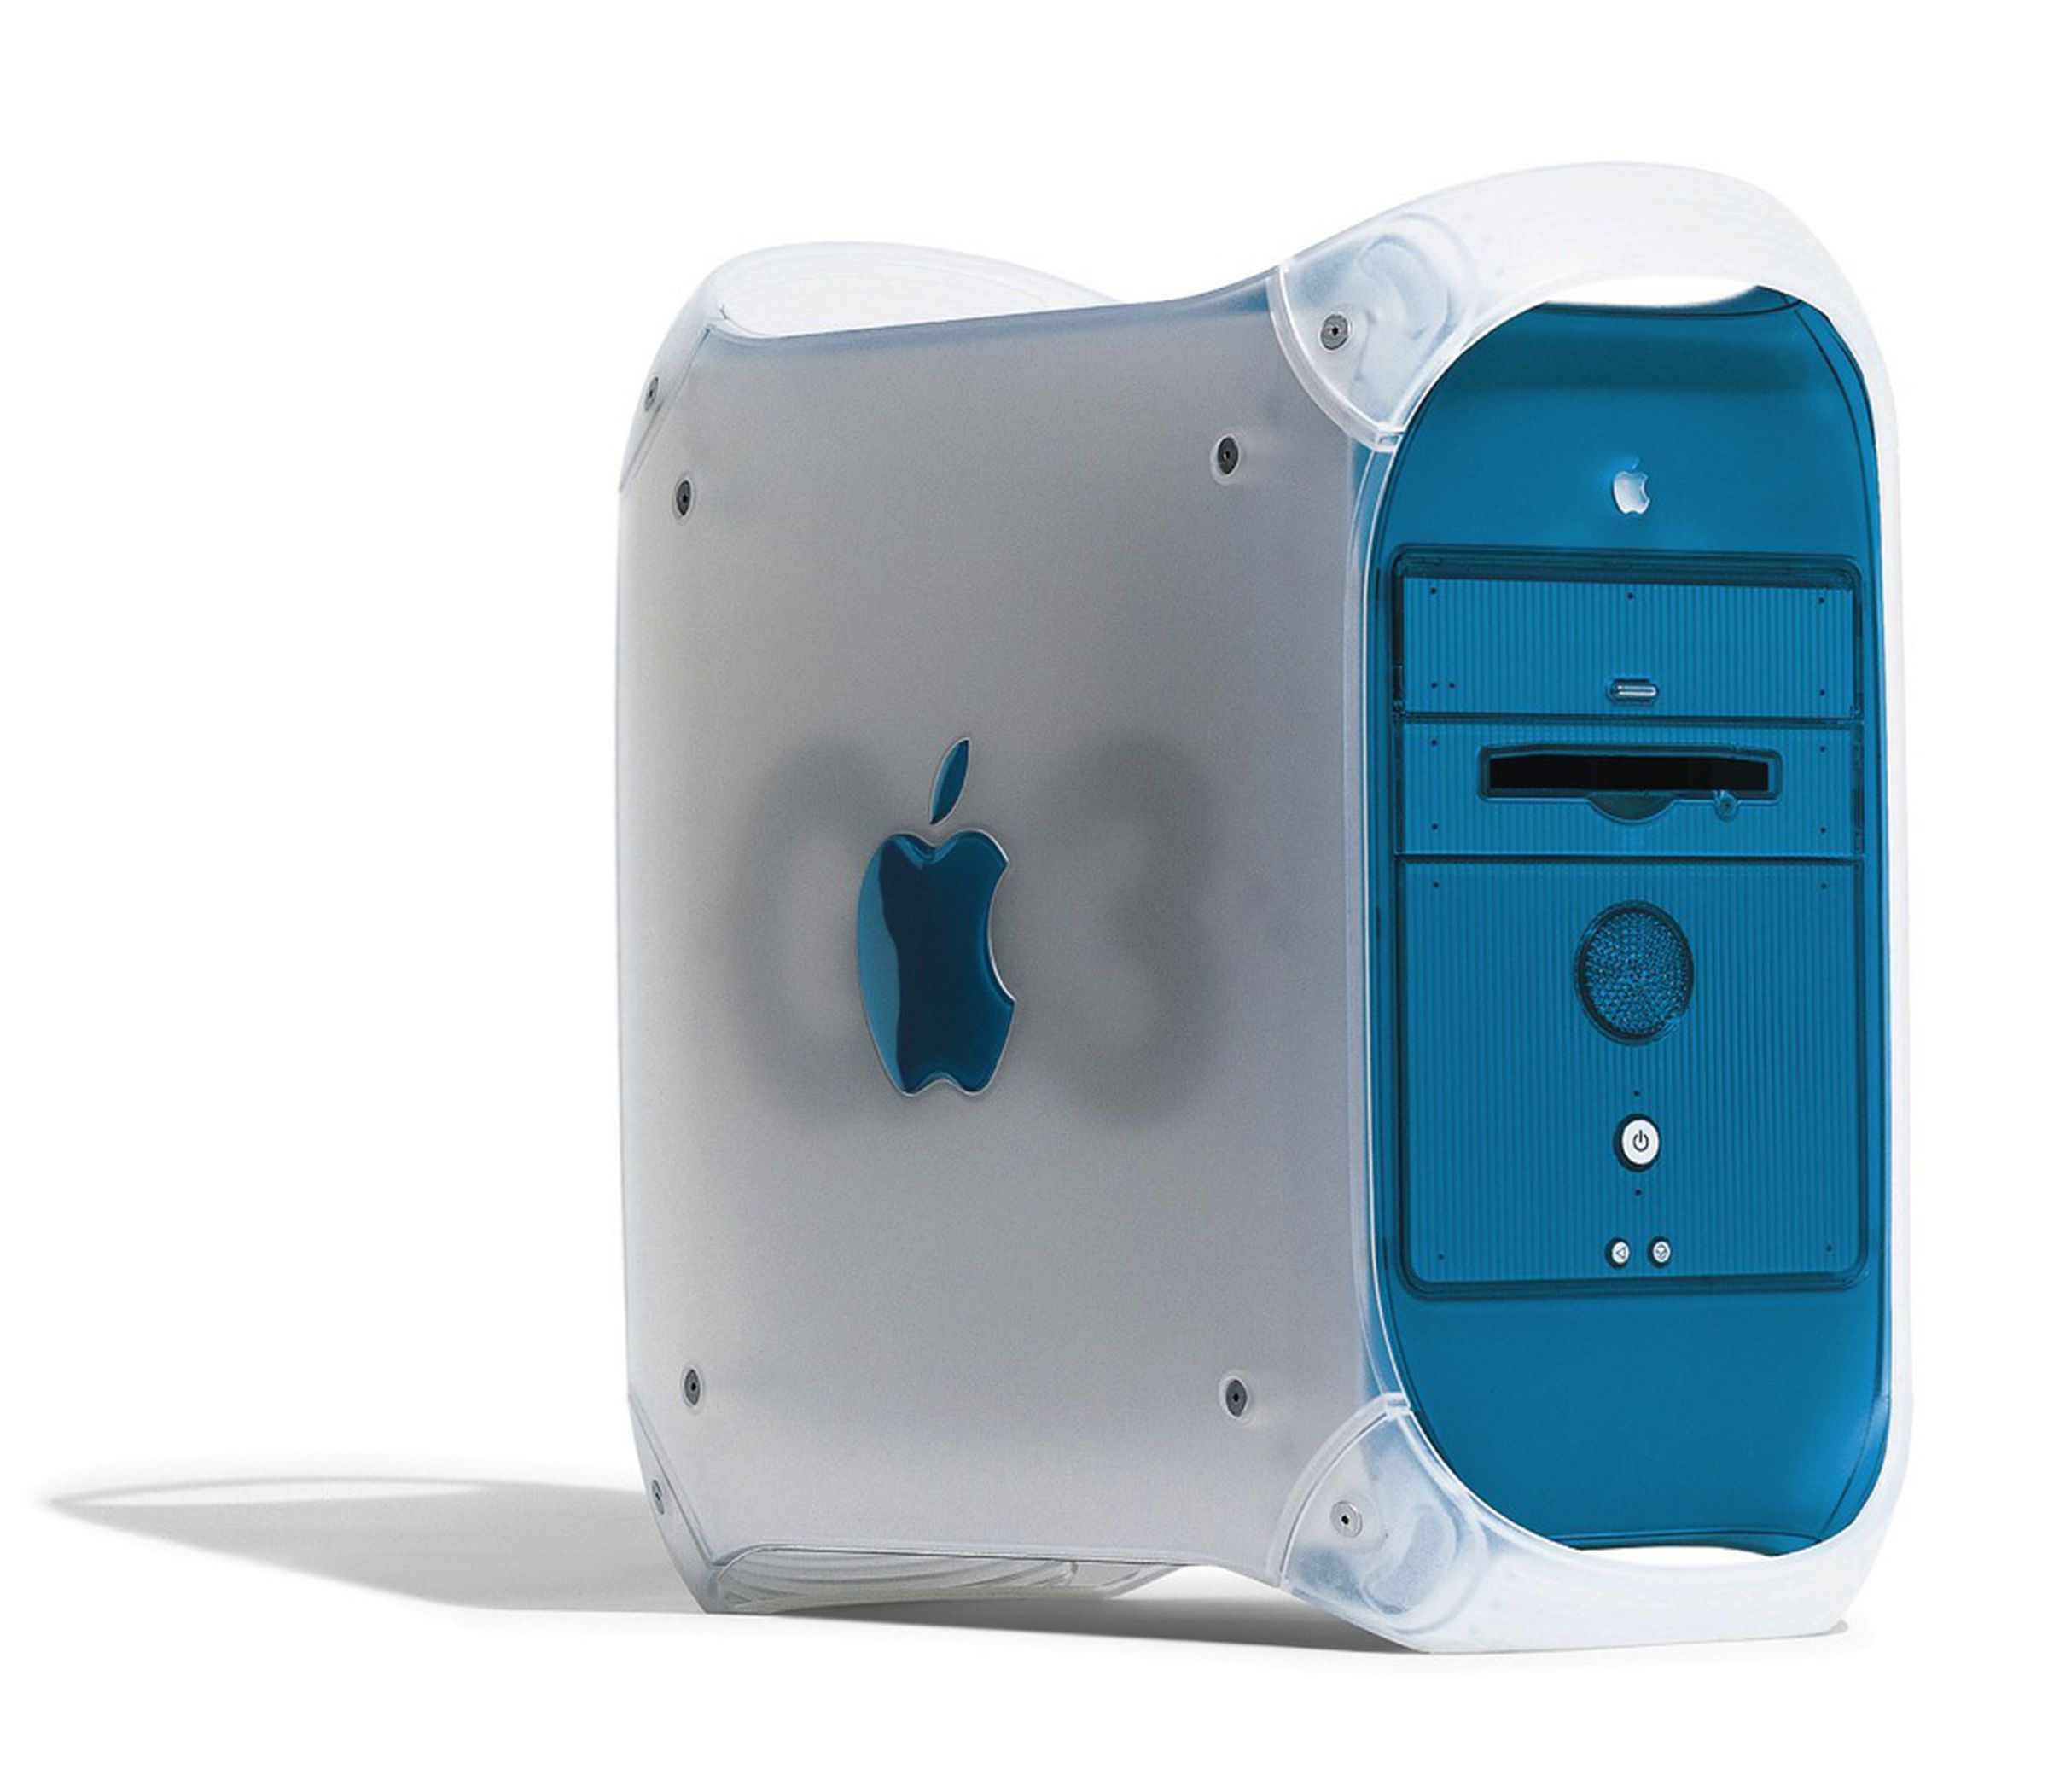 30 years of Apple's Macintosh lineup